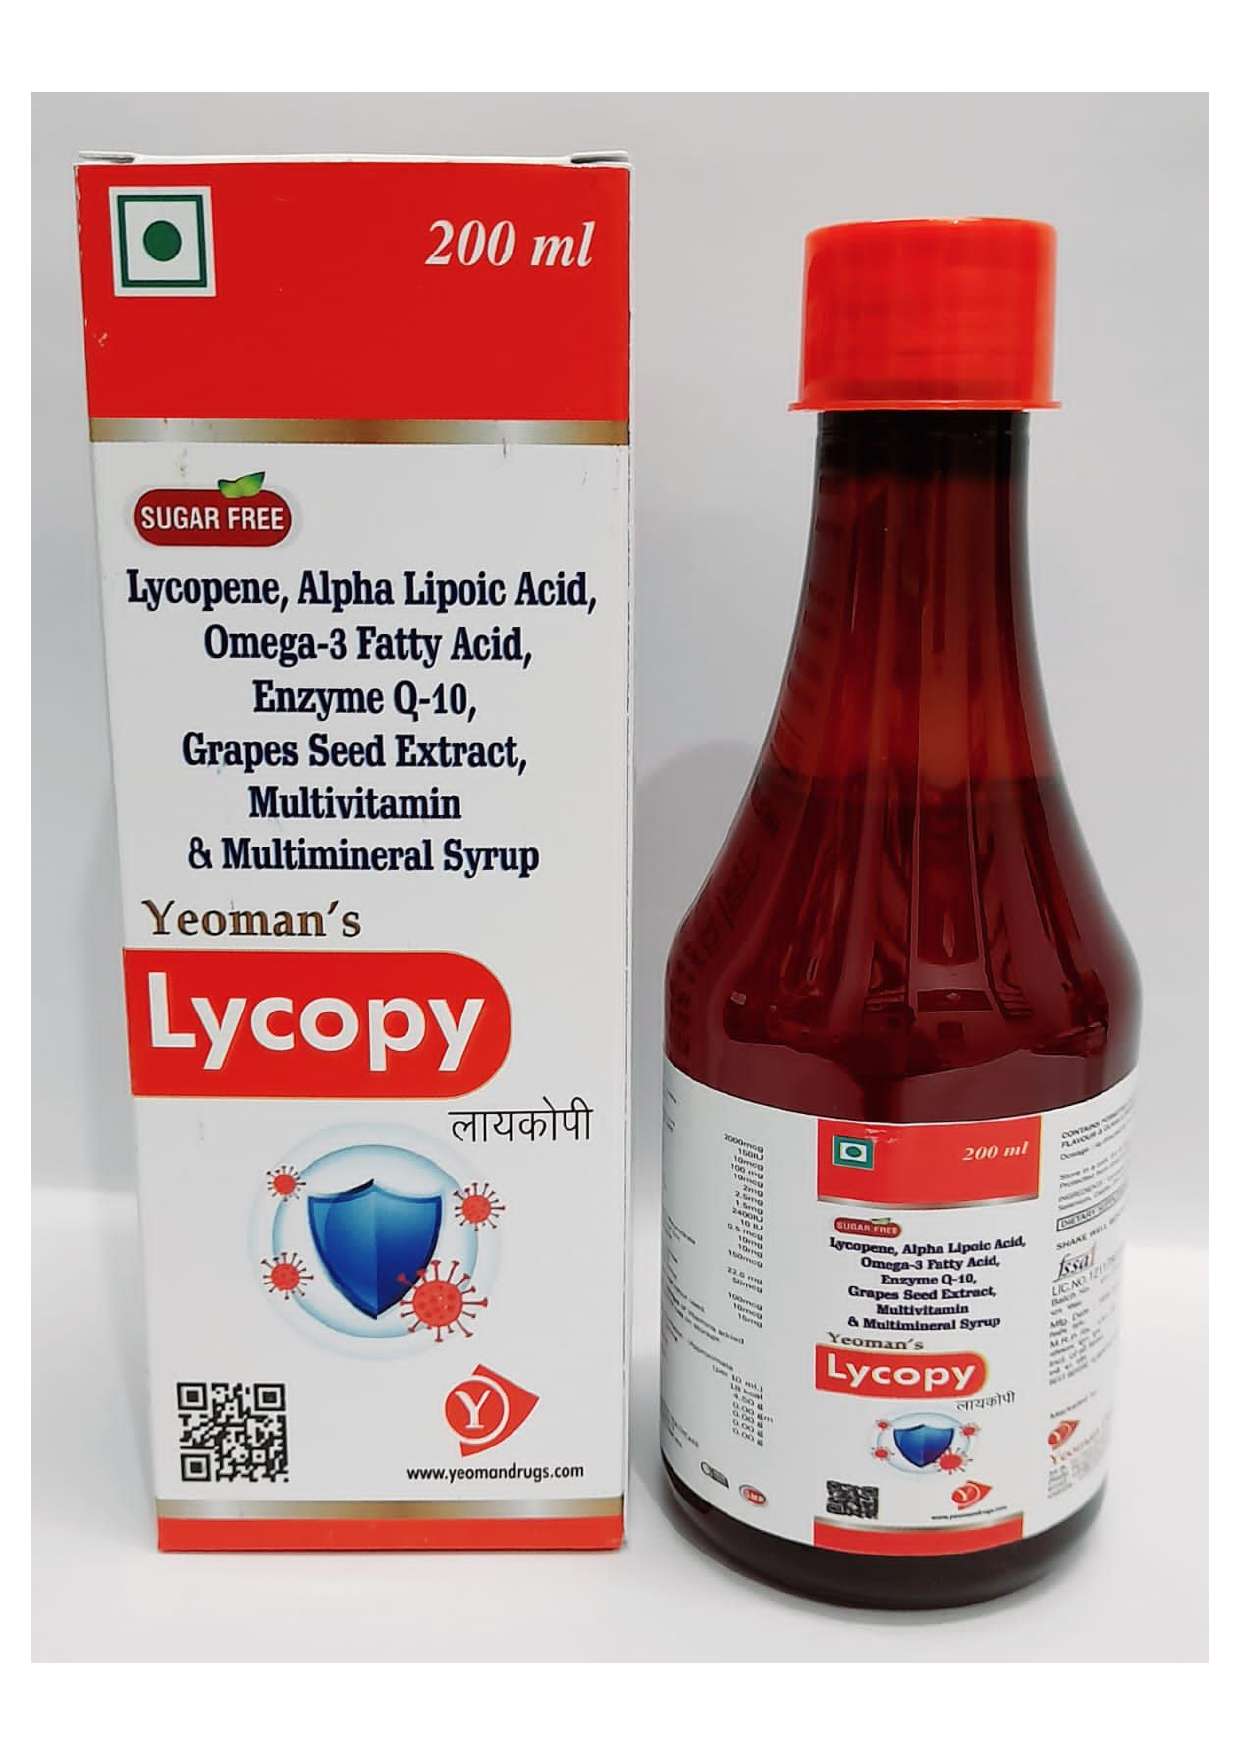 lycopene + omega3 + vitamins + minerals + enzyme q9